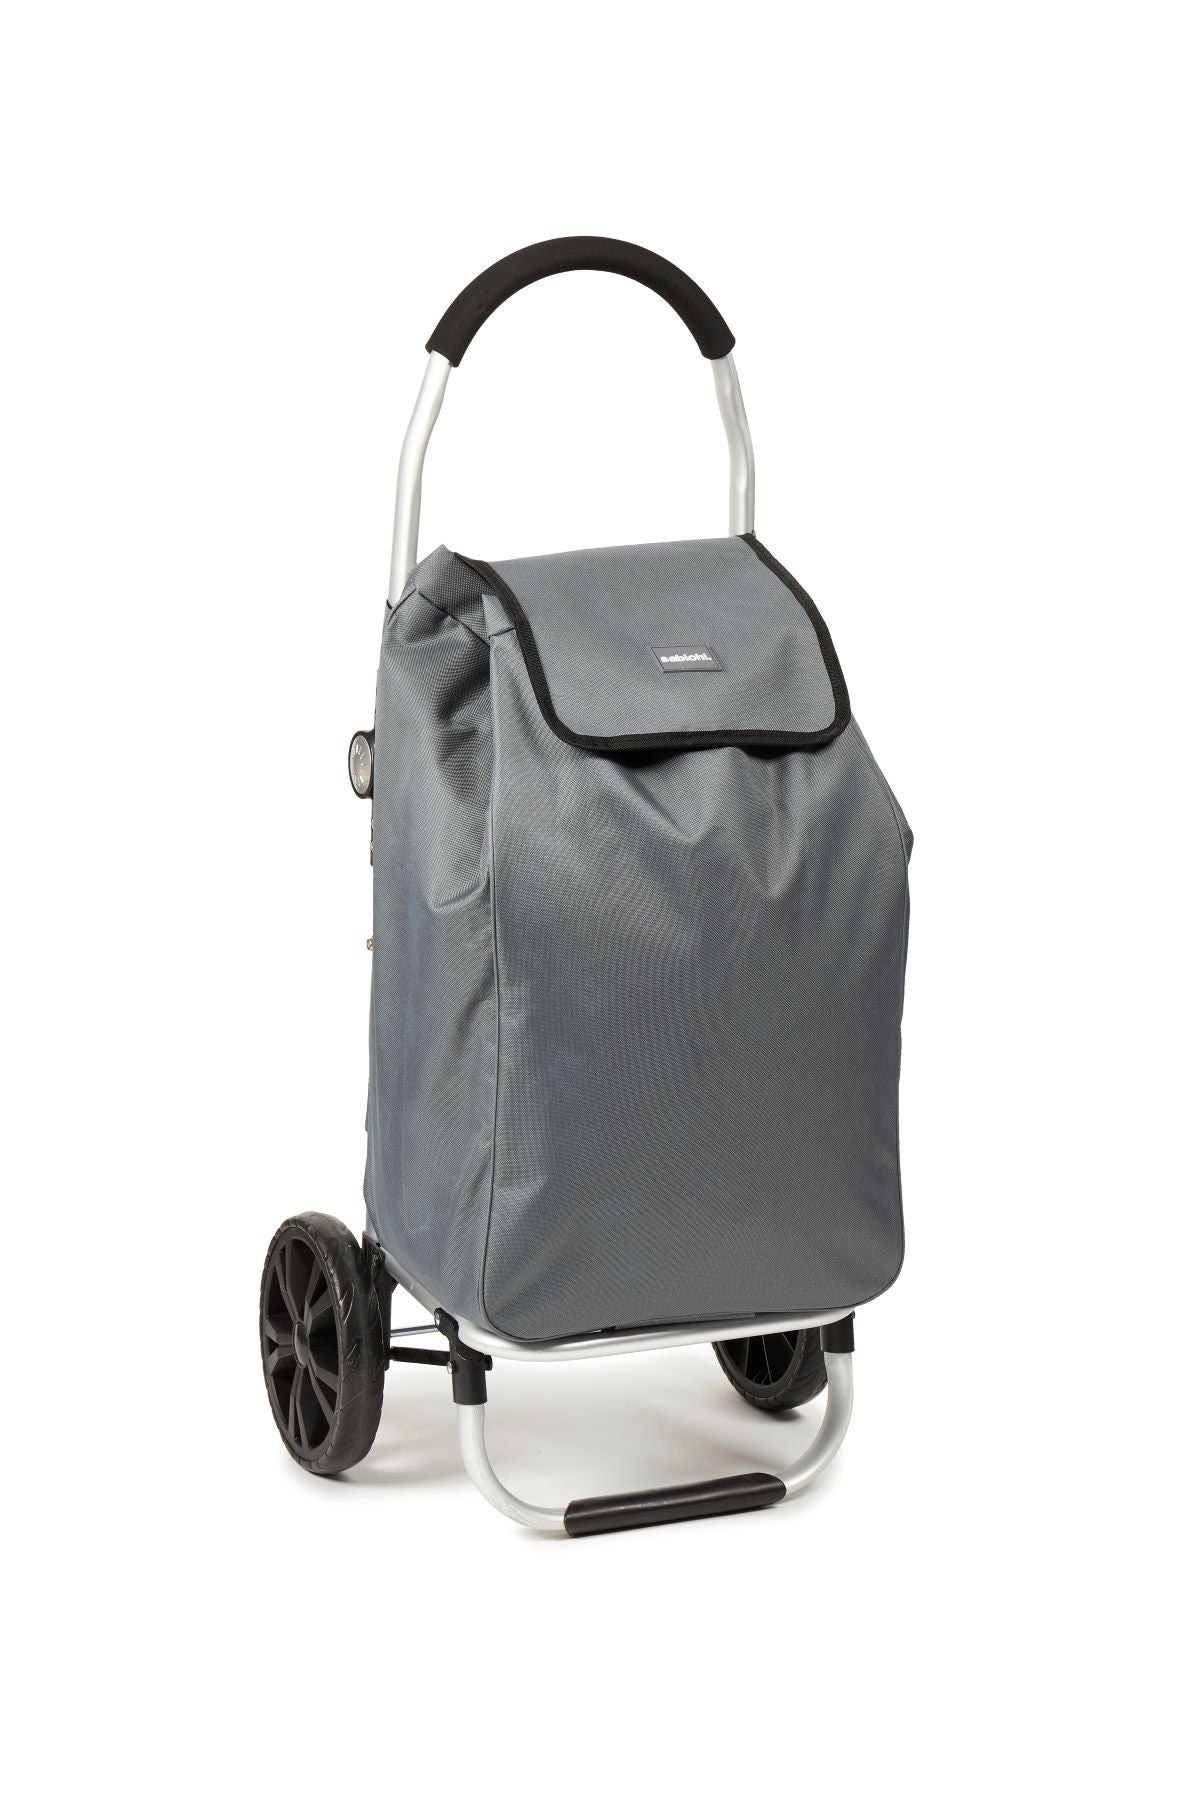 Senza Foldable Shopping Trolley Bag - 99 Rands